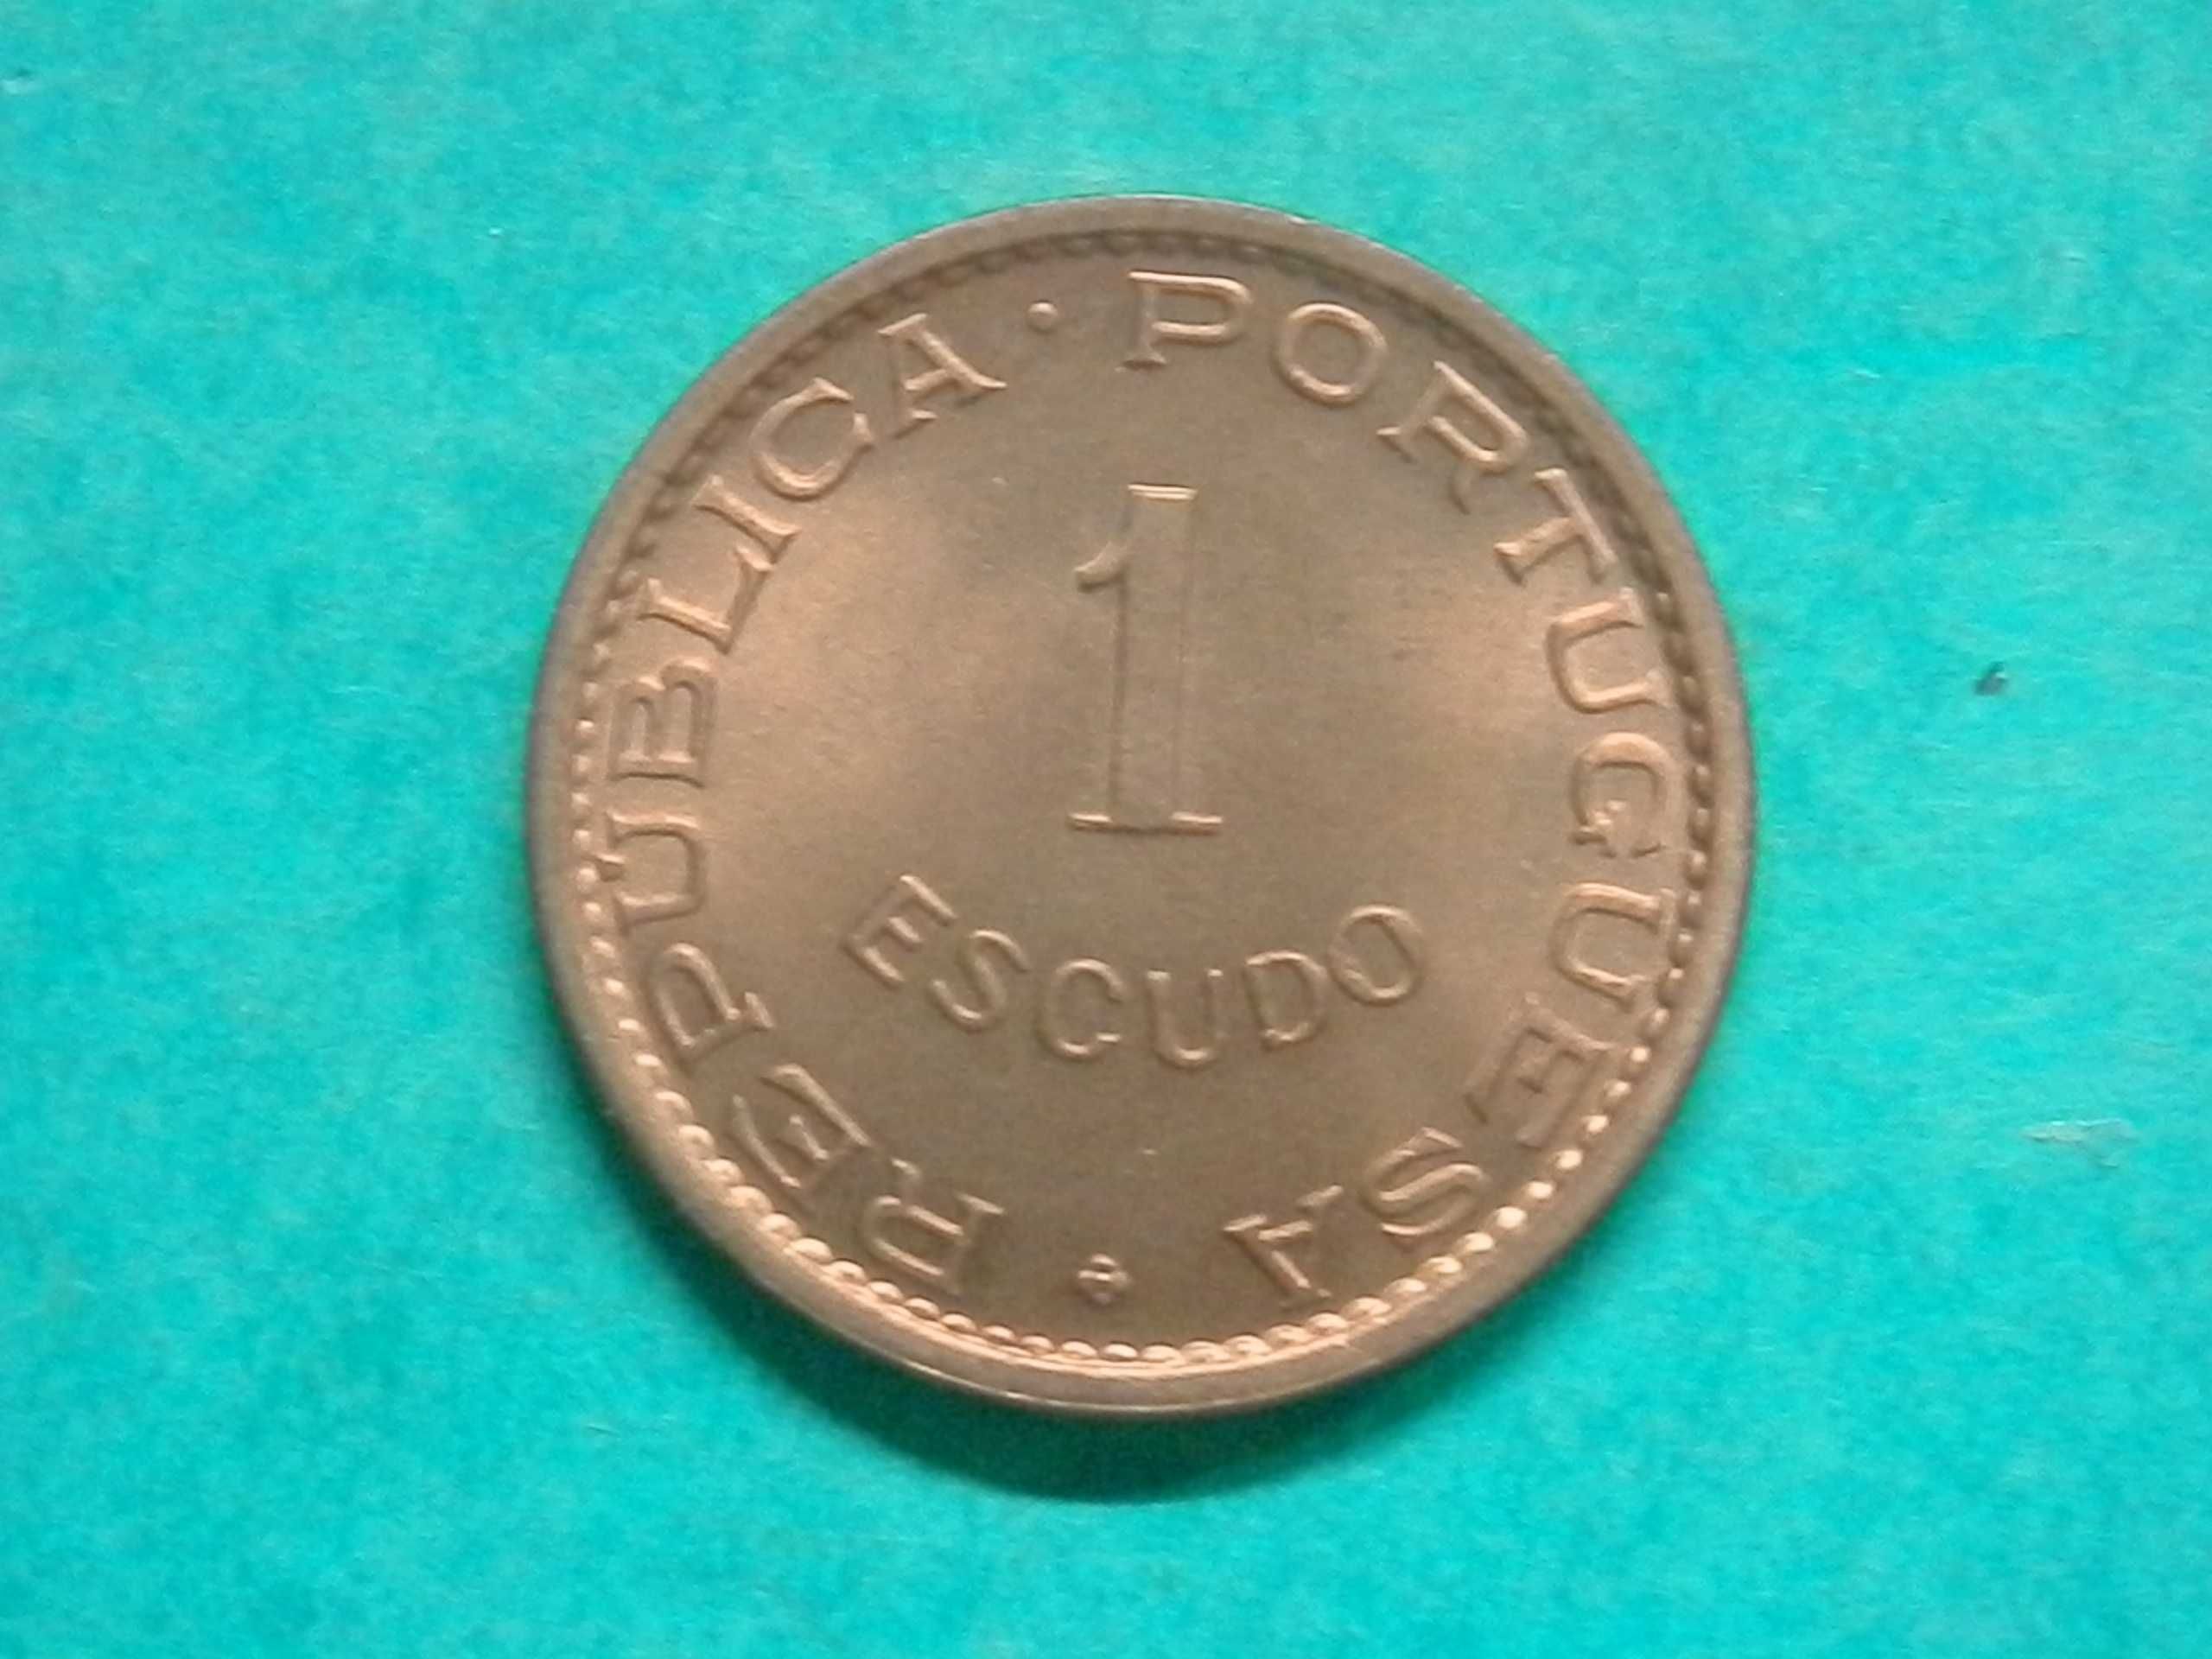 914 - Angola: 1 escudo 1972 bronze, por 2,00